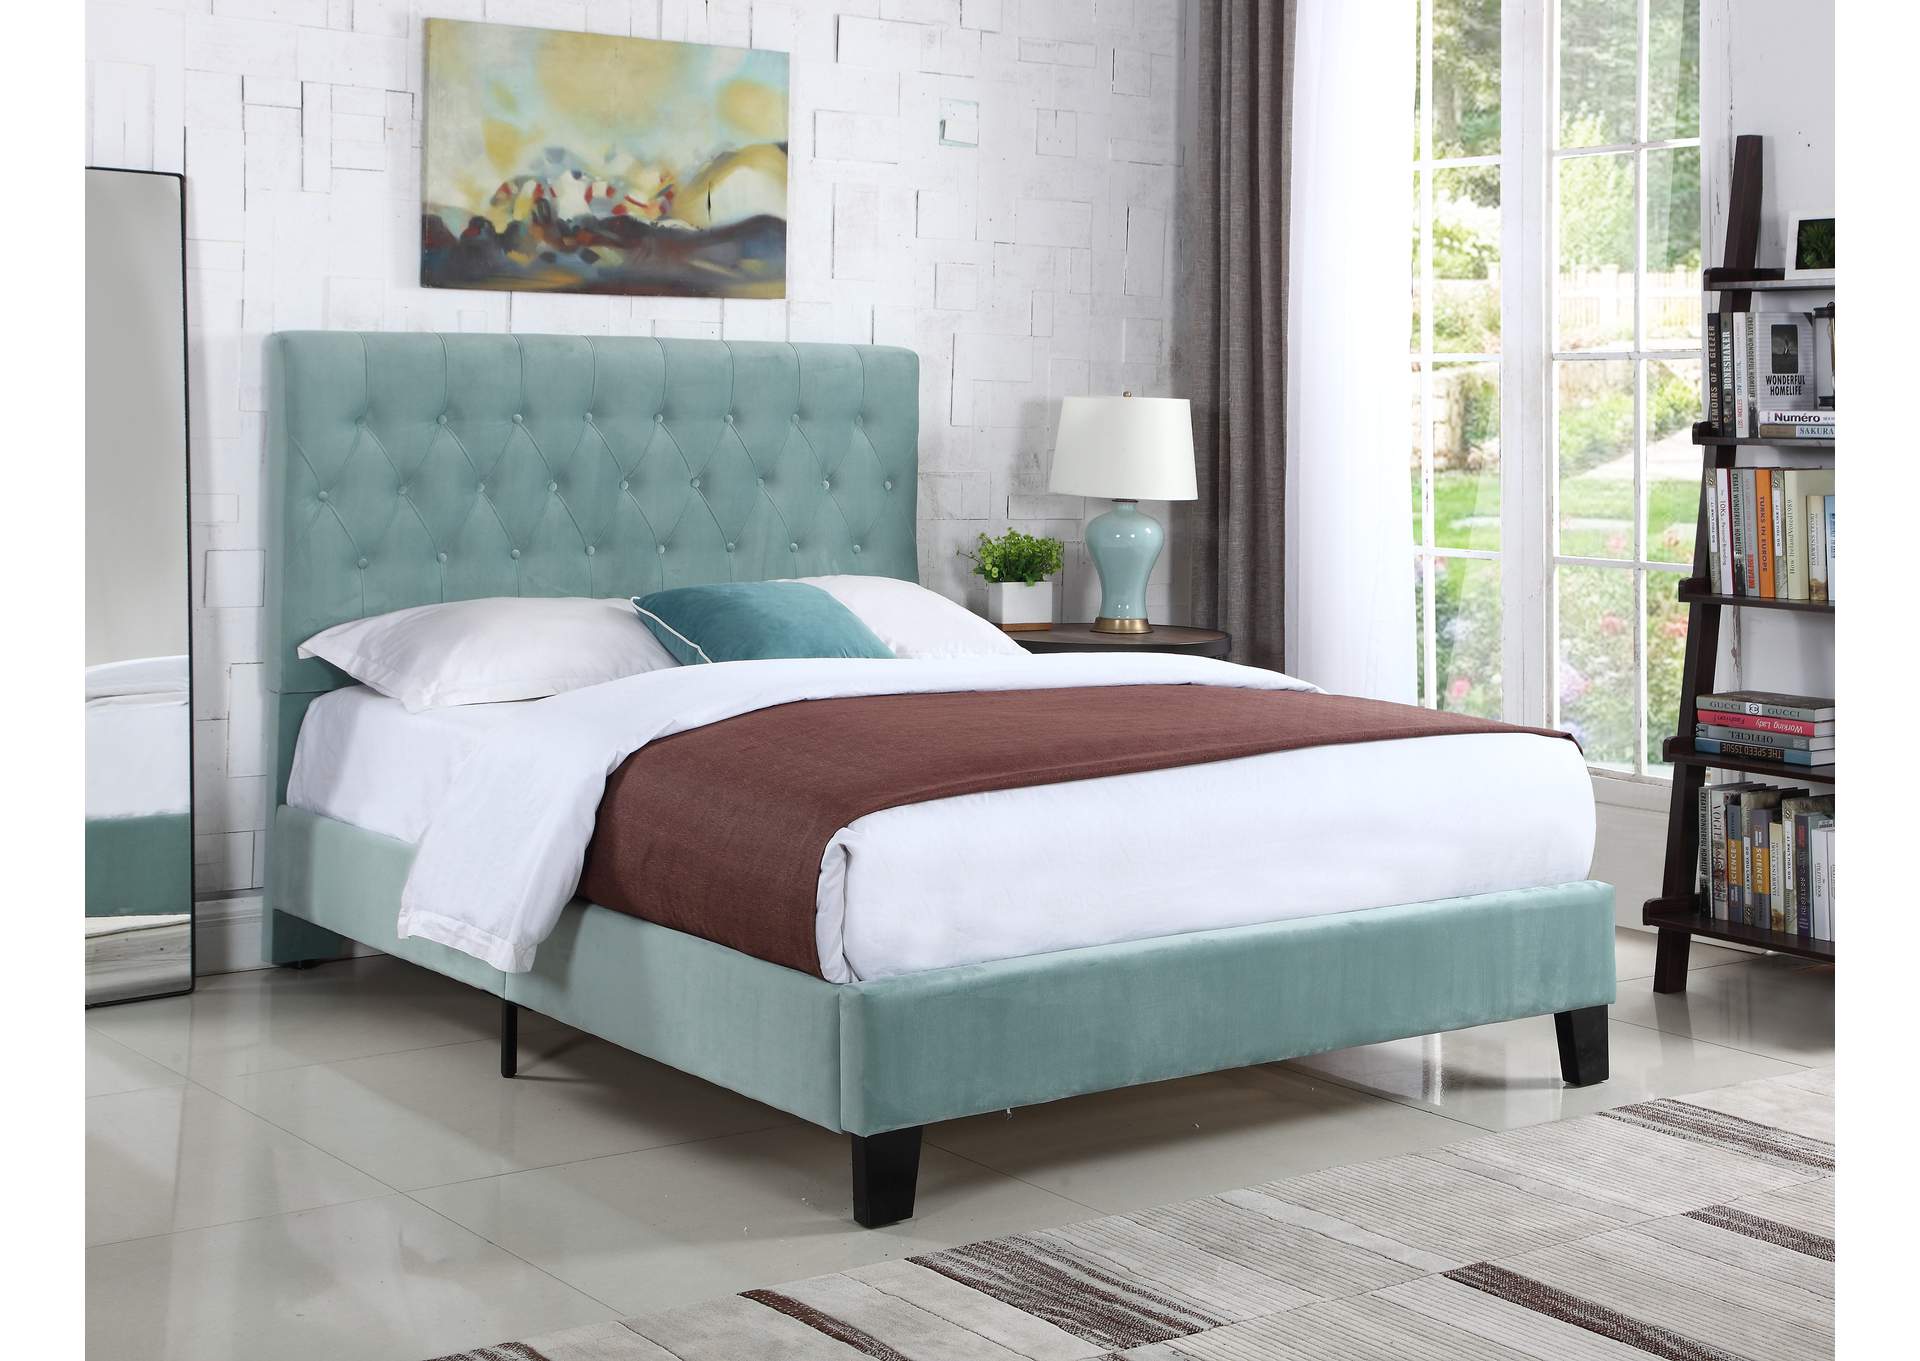 Amelia Light Blue Full Upholstered Bed,Emerald Home Furnishings